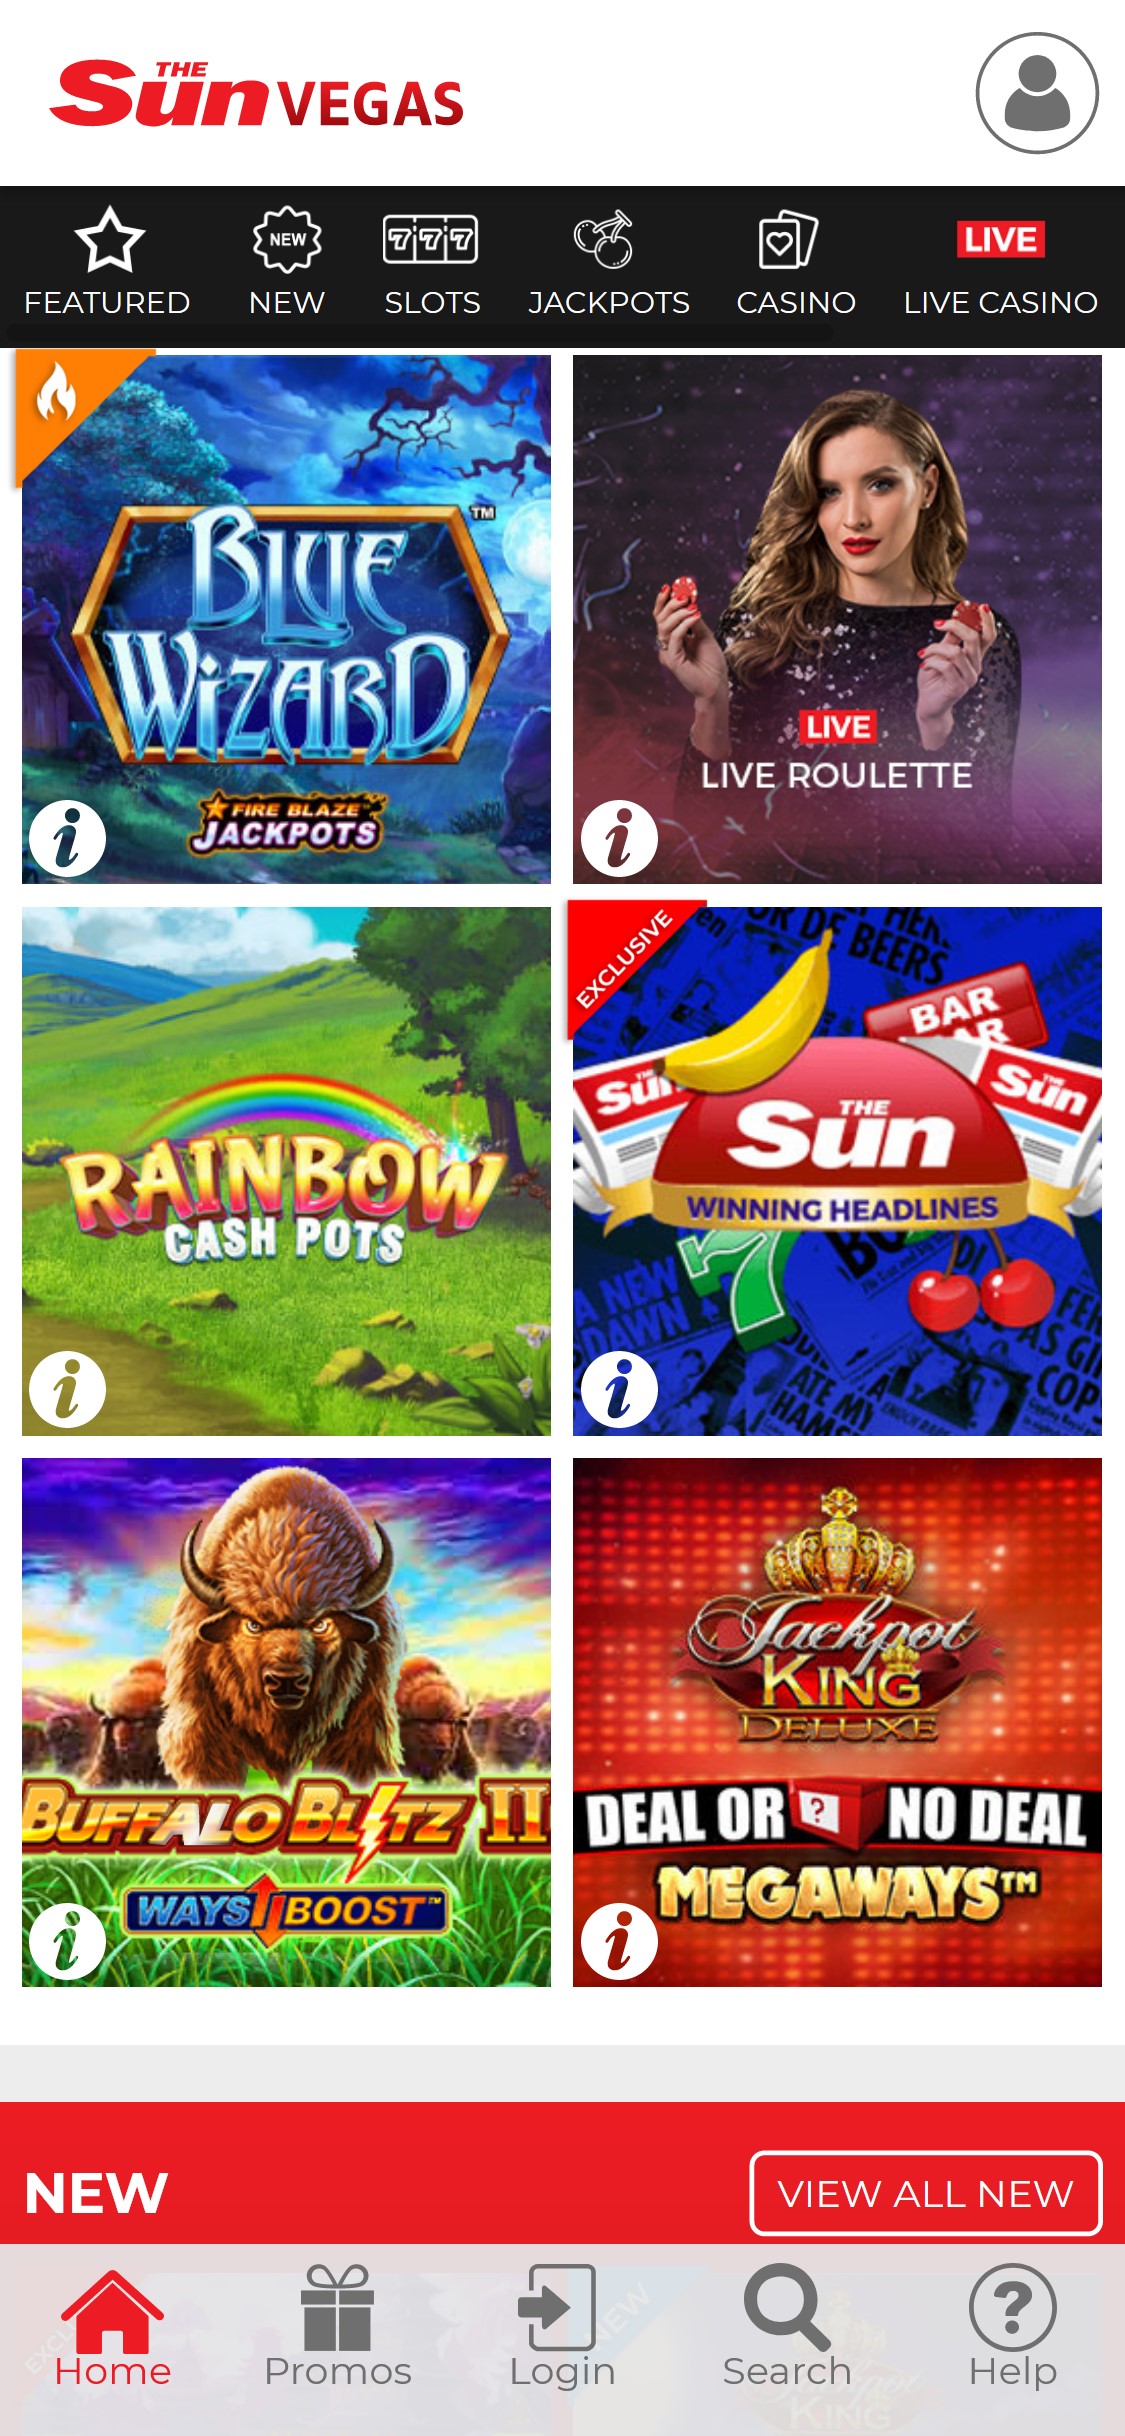 The Sun Vegas Casino Mobile Games Review